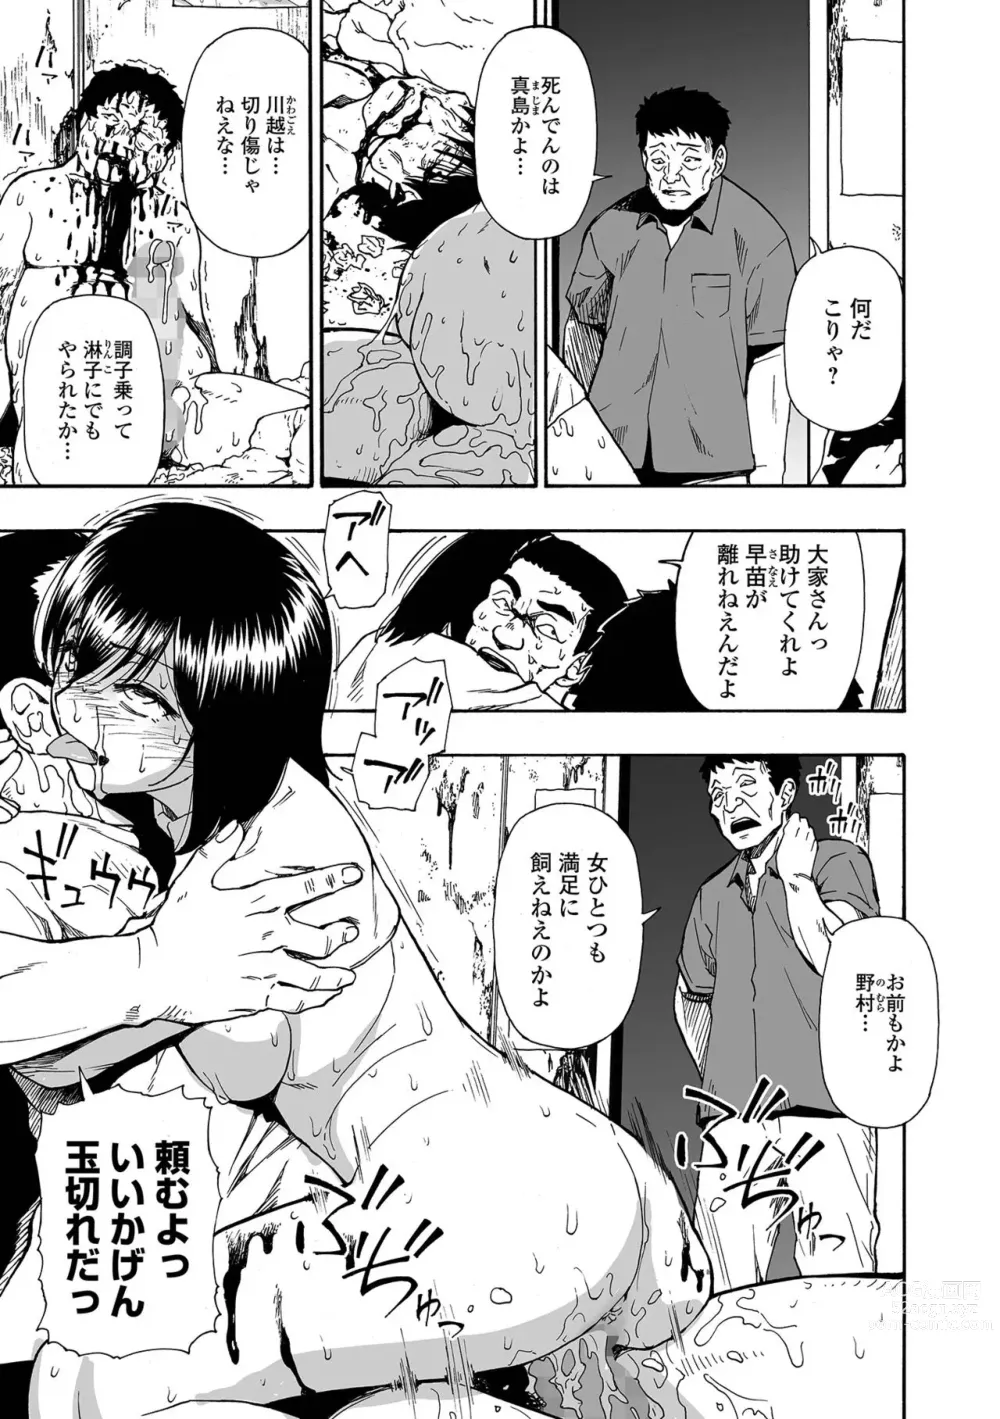 Page 175 of manga Garbage Dump Ch. 1-9